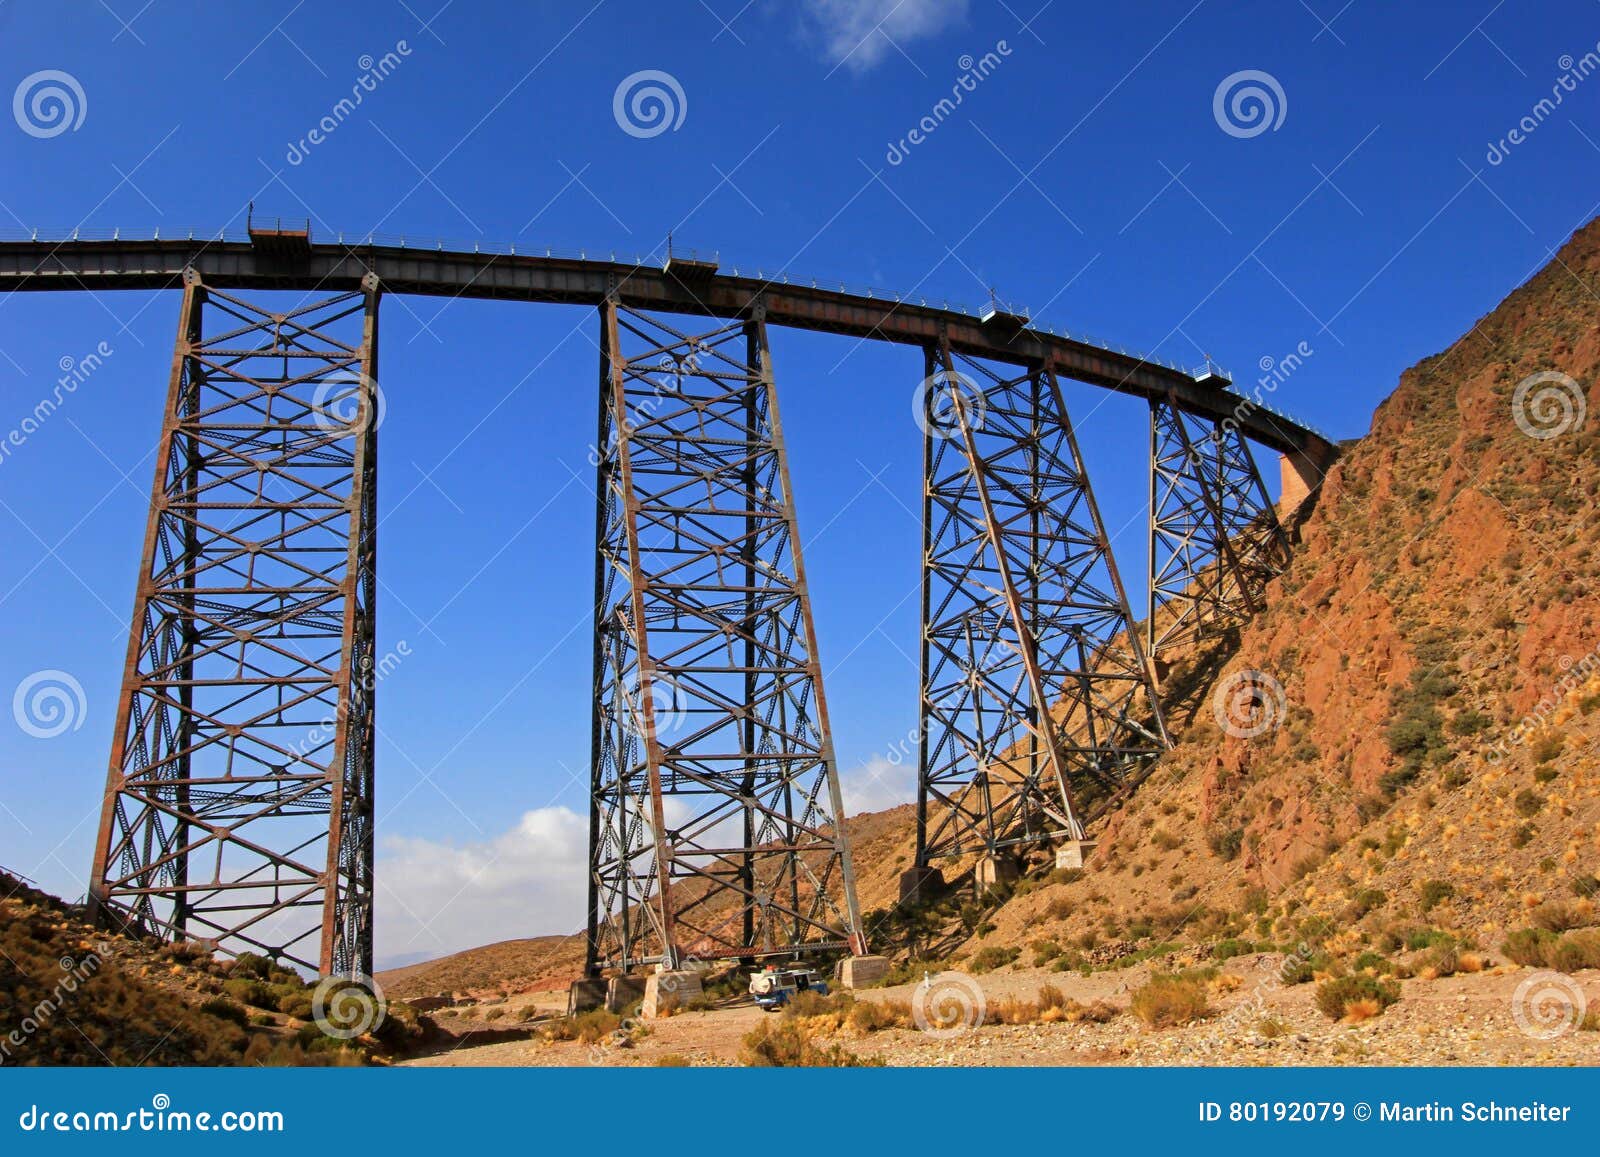 la polvorilla viaduct, tren a las nubes, northwest of argentina